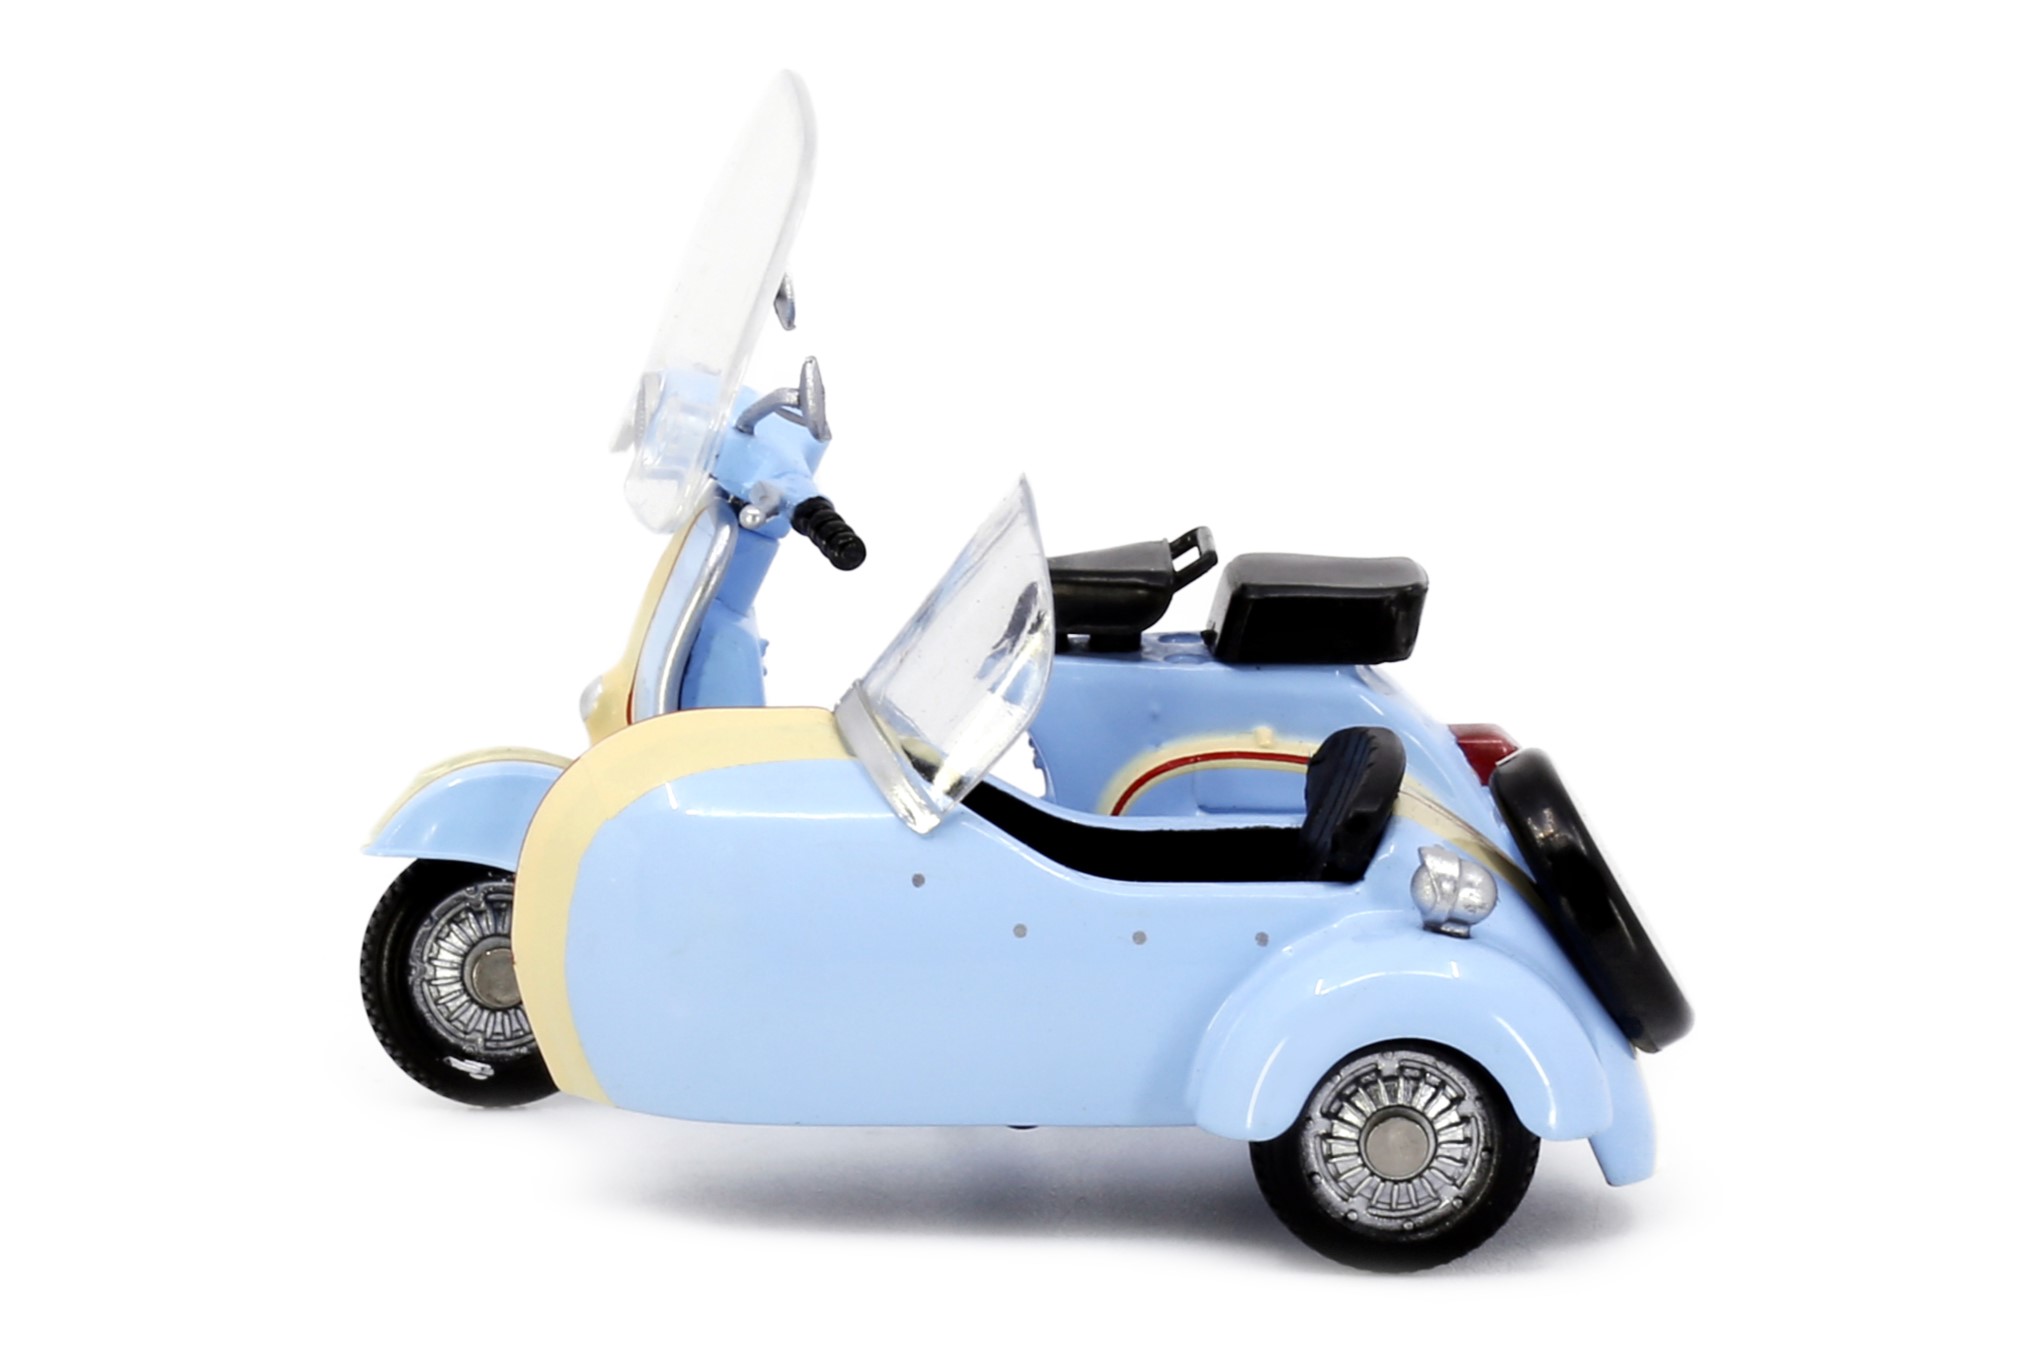 Skala 1/35 Scooter w Sidecar/sidovagn fr Tiny Toys